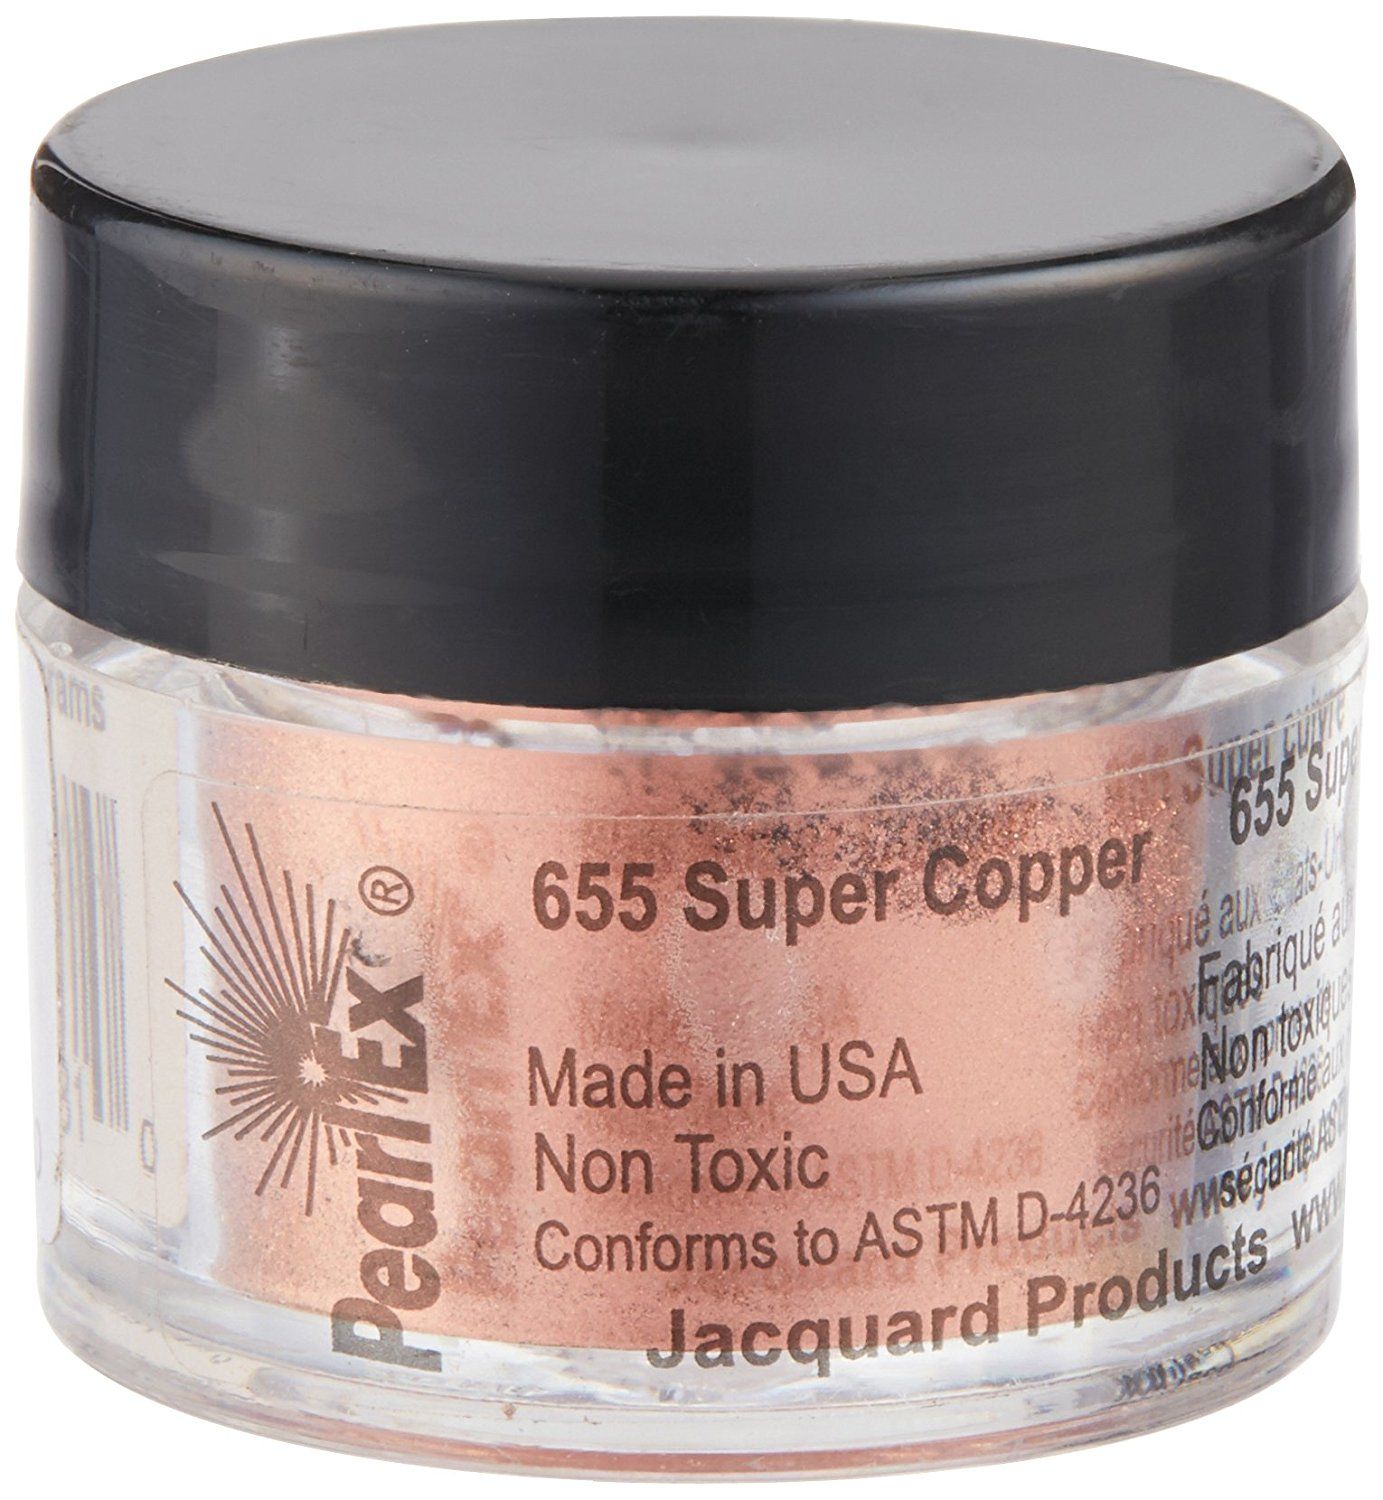 Jacquard Pearl Ex Powdered Super Copper Pigment 3g